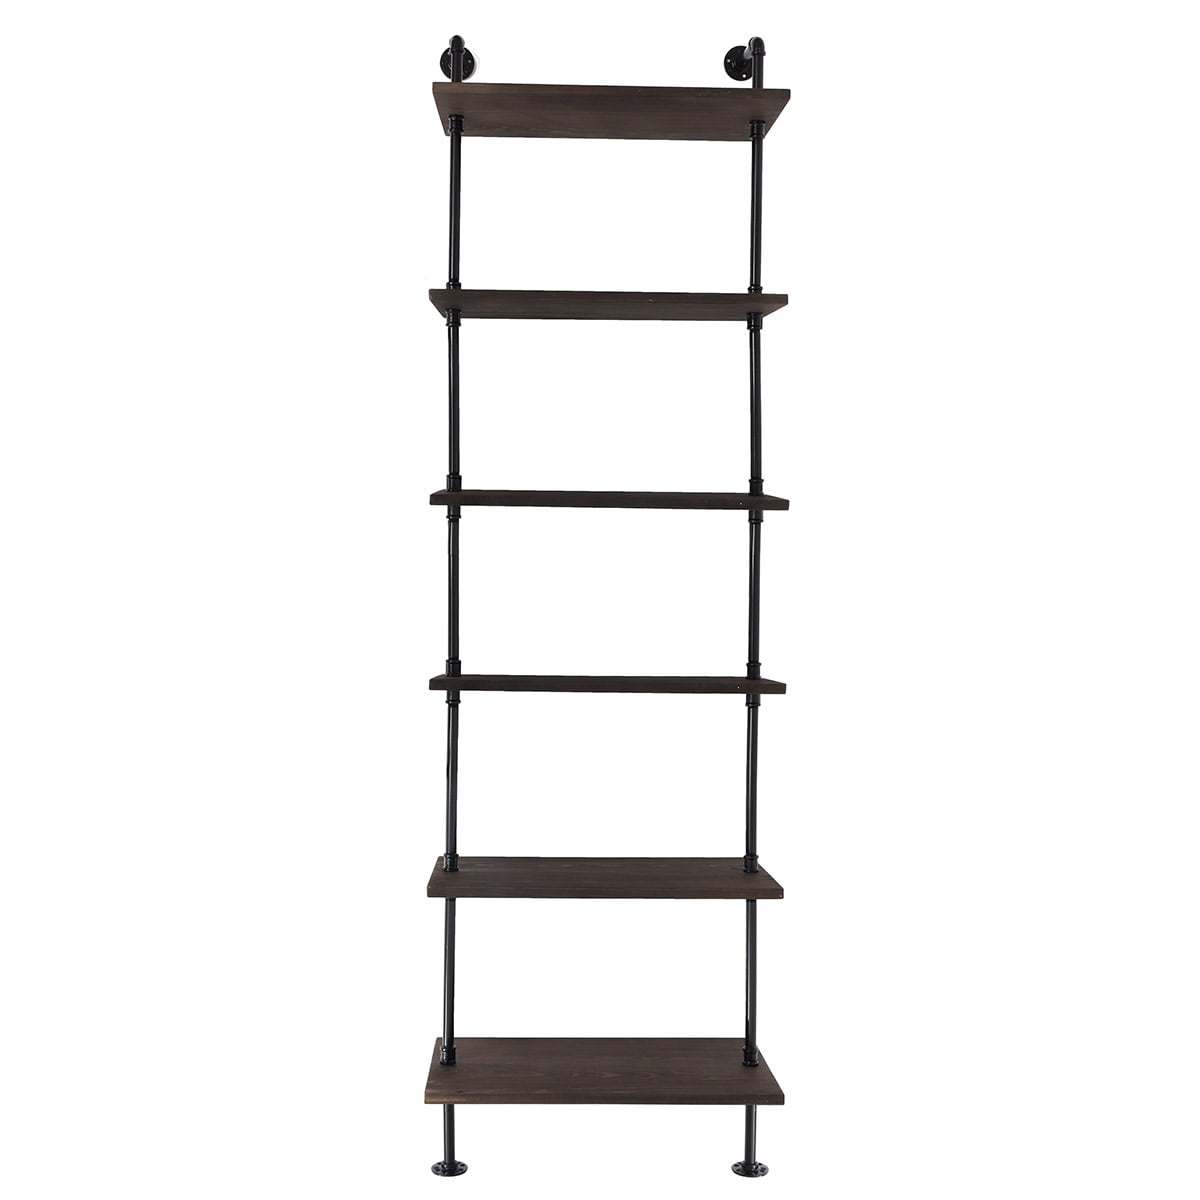 Details about   Industrial Ladder Shelf 4/5-Tier Bookshelf Storage Rack Shelves Classic Black 